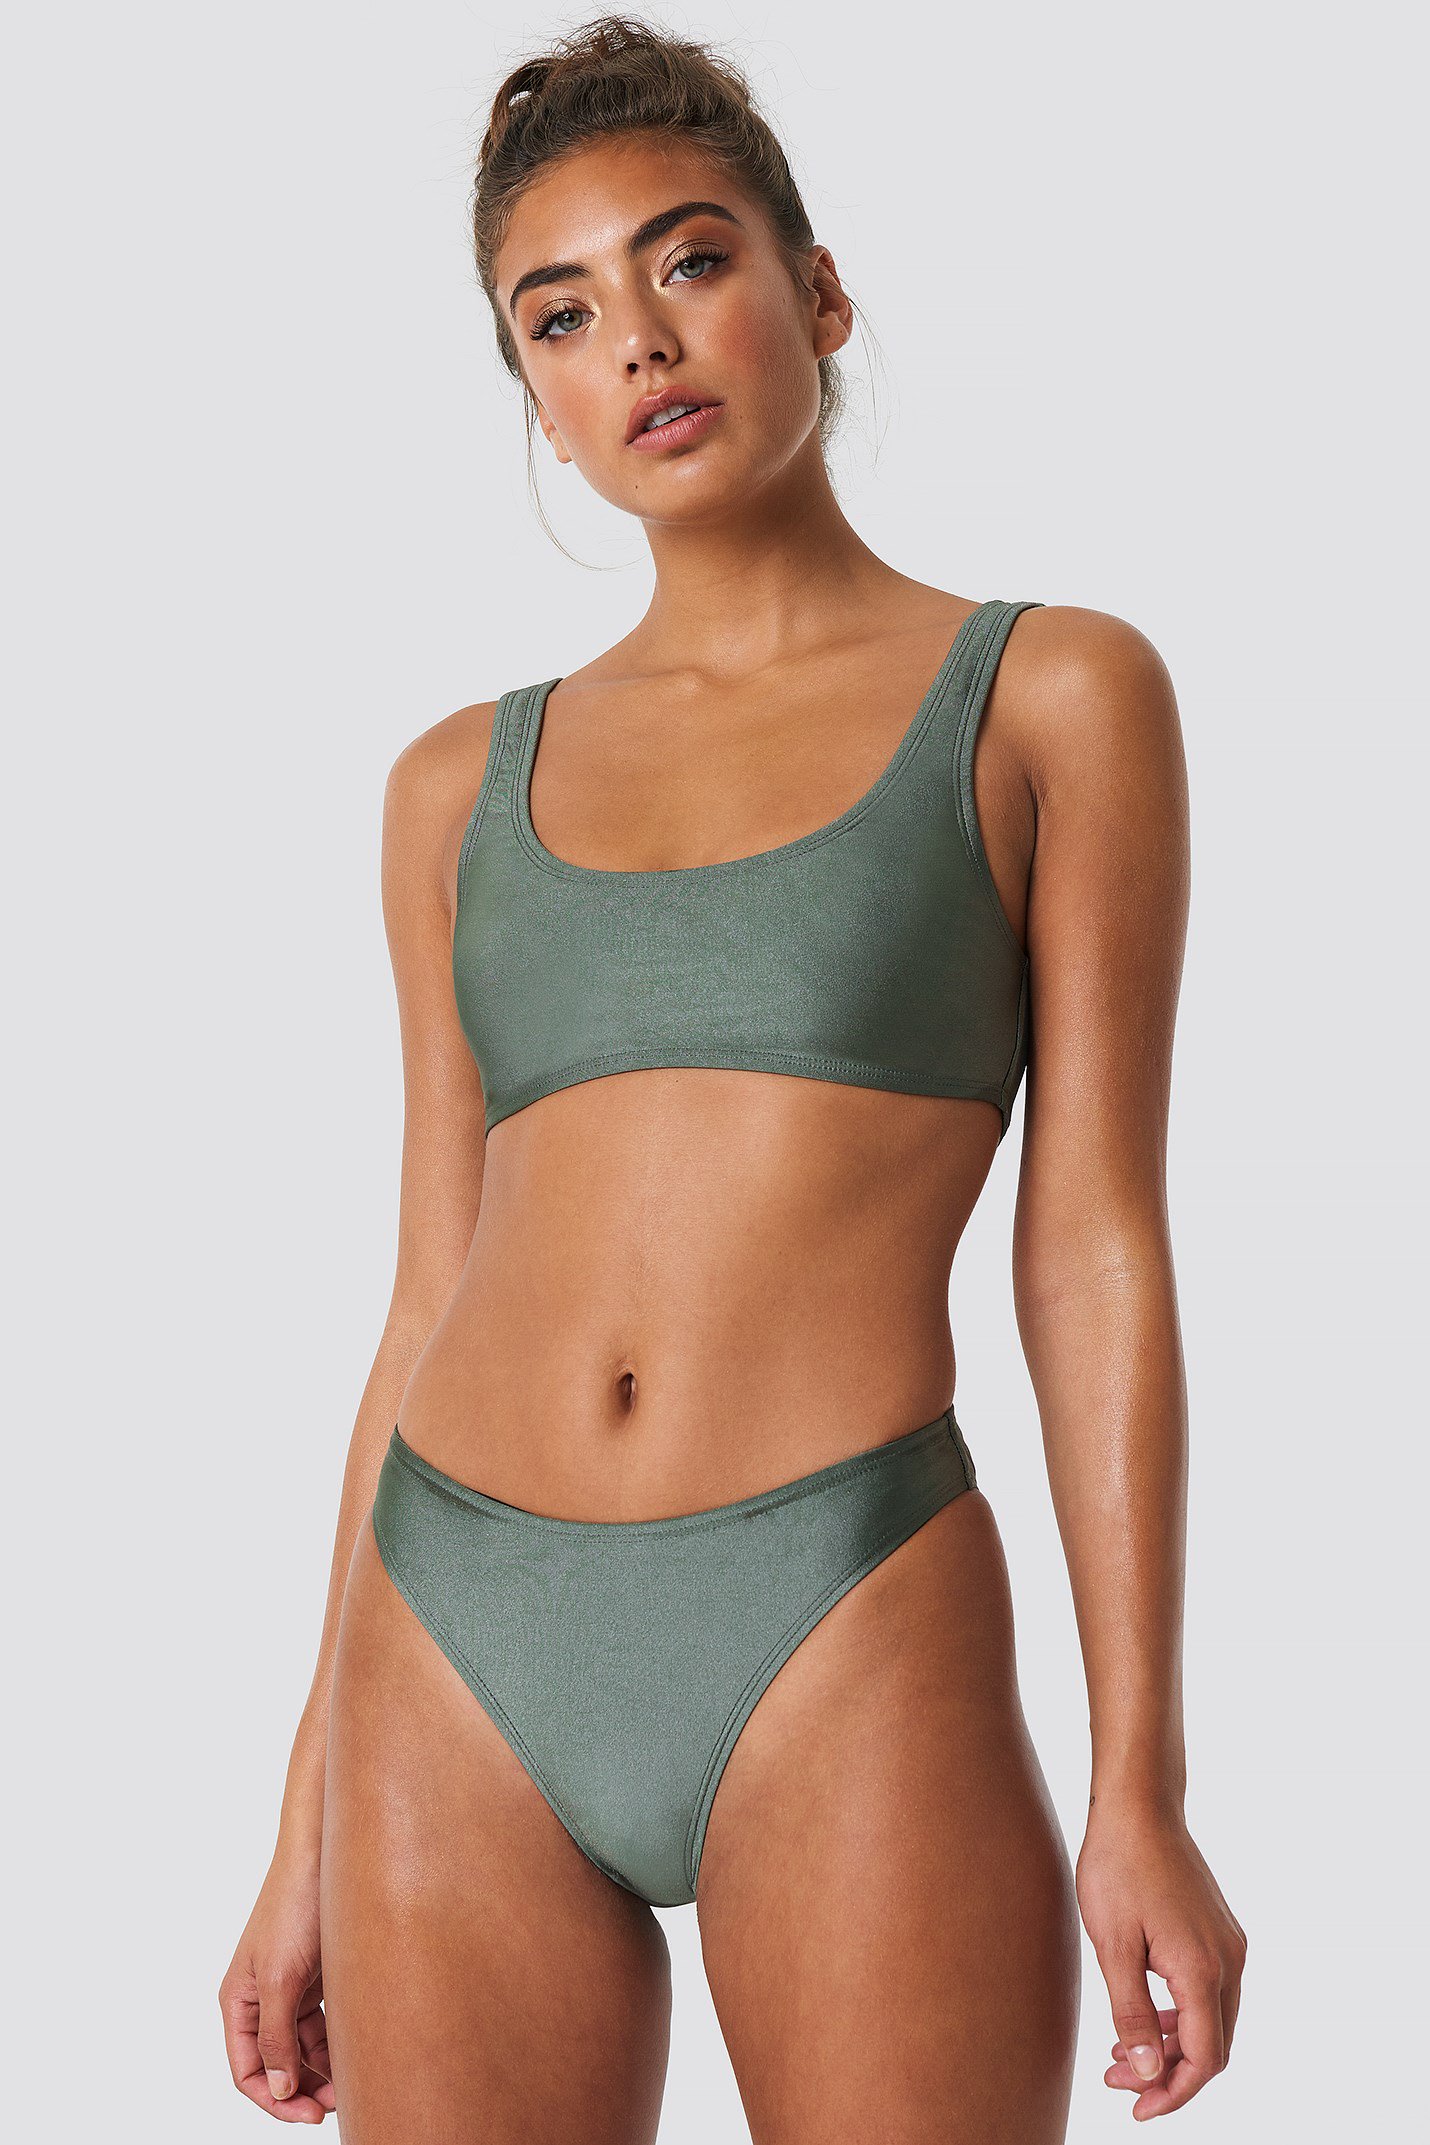 Green Sporty Bikini Outfit